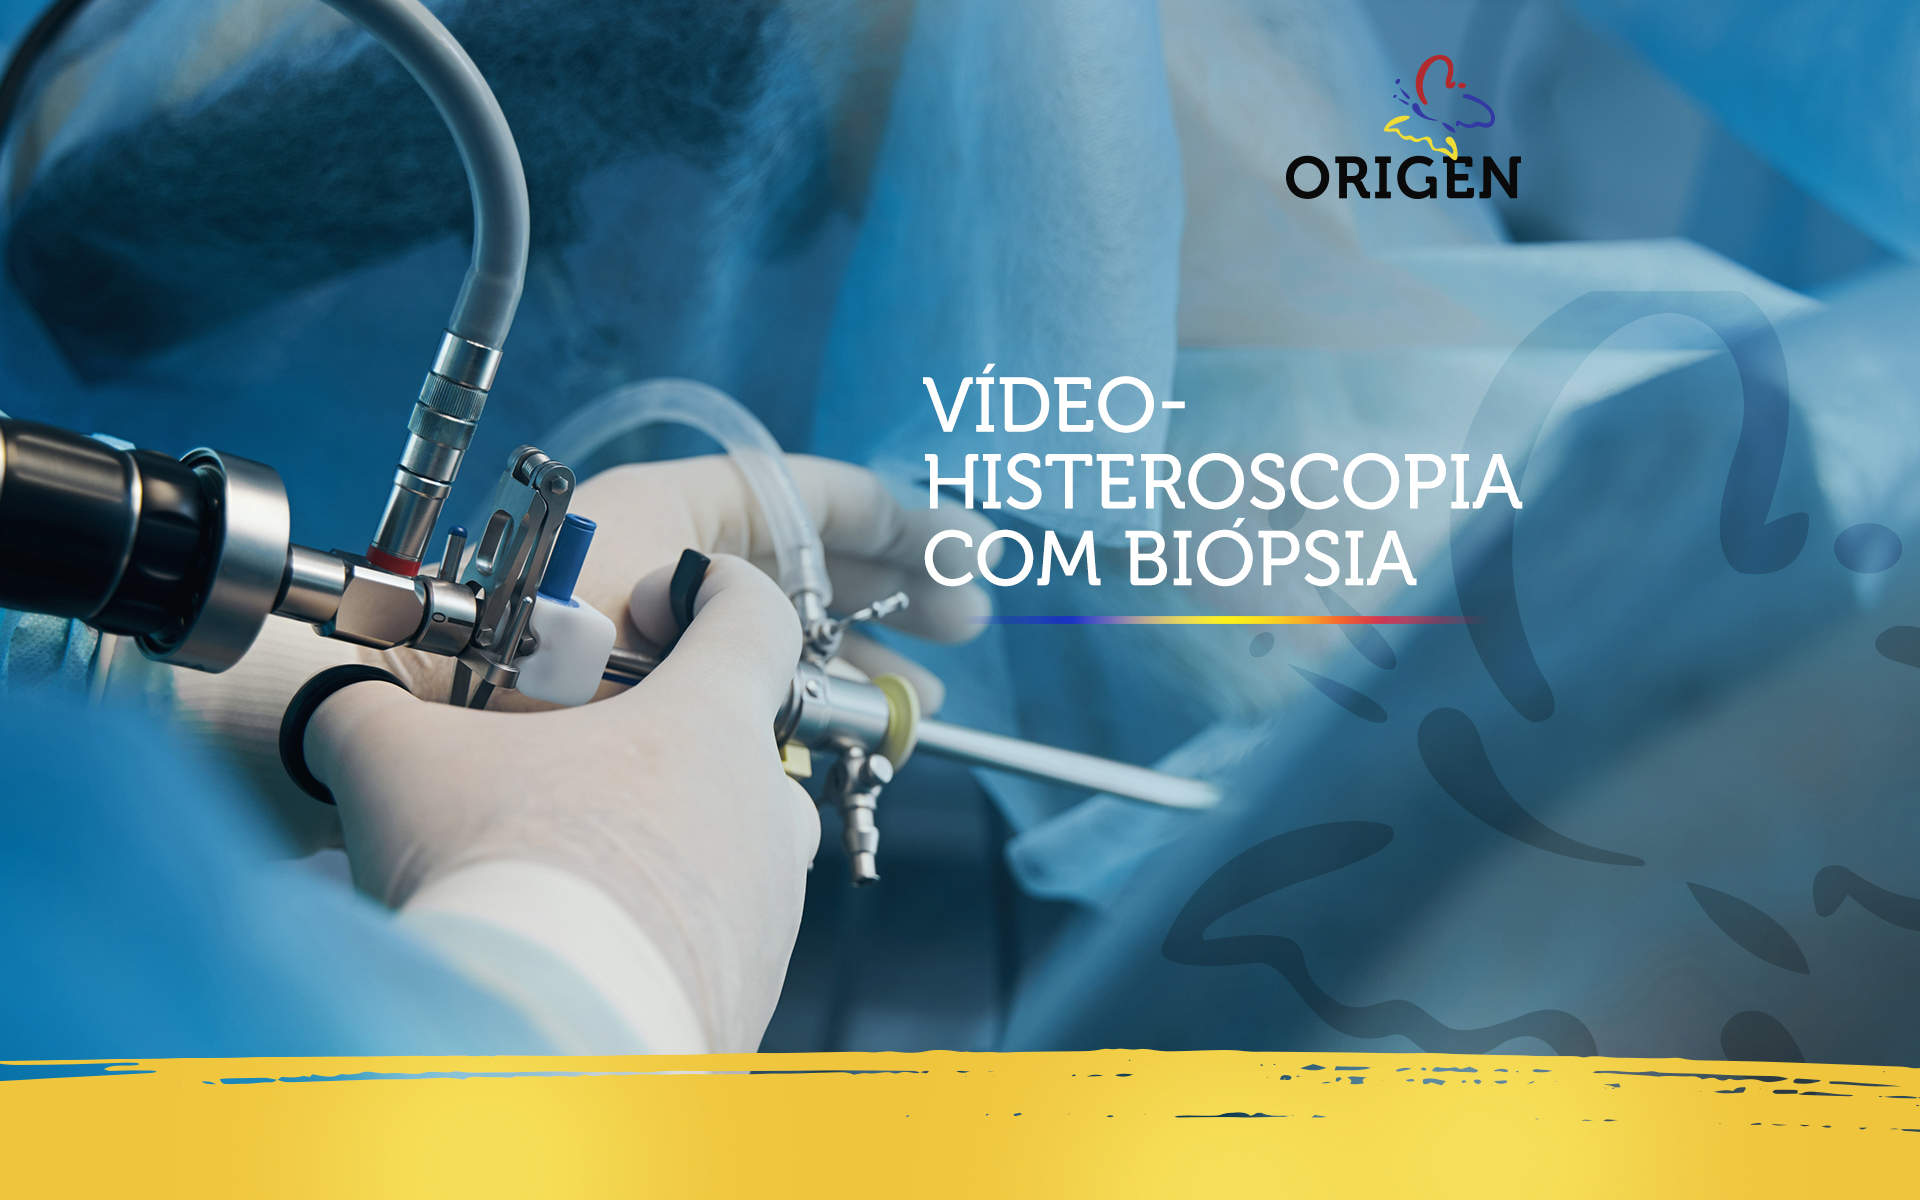 Vídeo-histeroscopia com biopsia